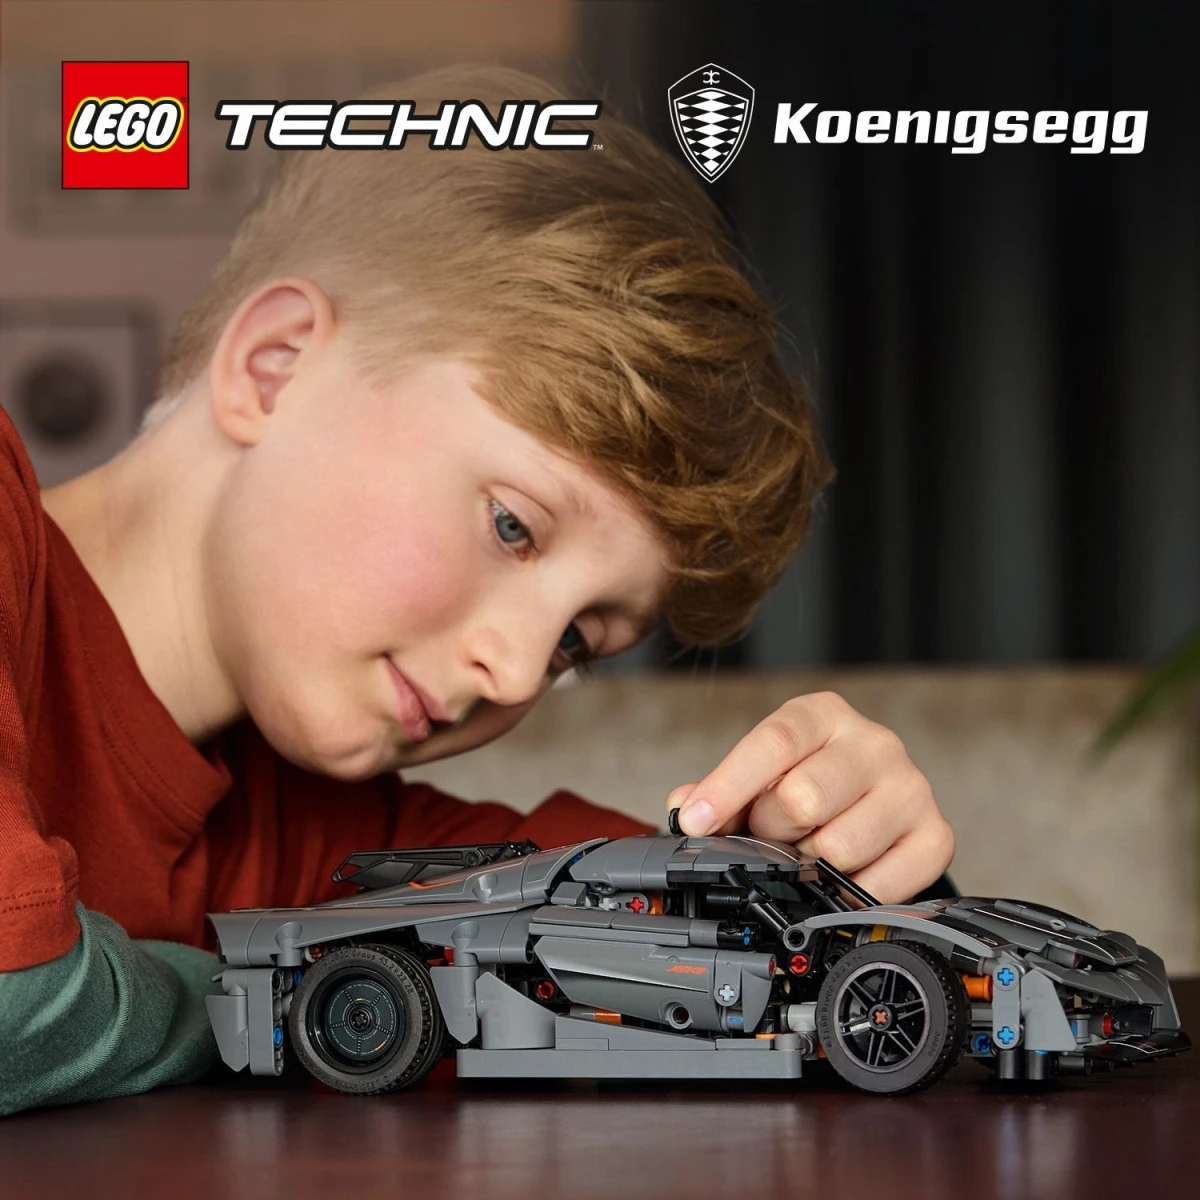 LEGO® Technic Koenigsegg Jesko Absolut Supersportwagen in Grau 42173